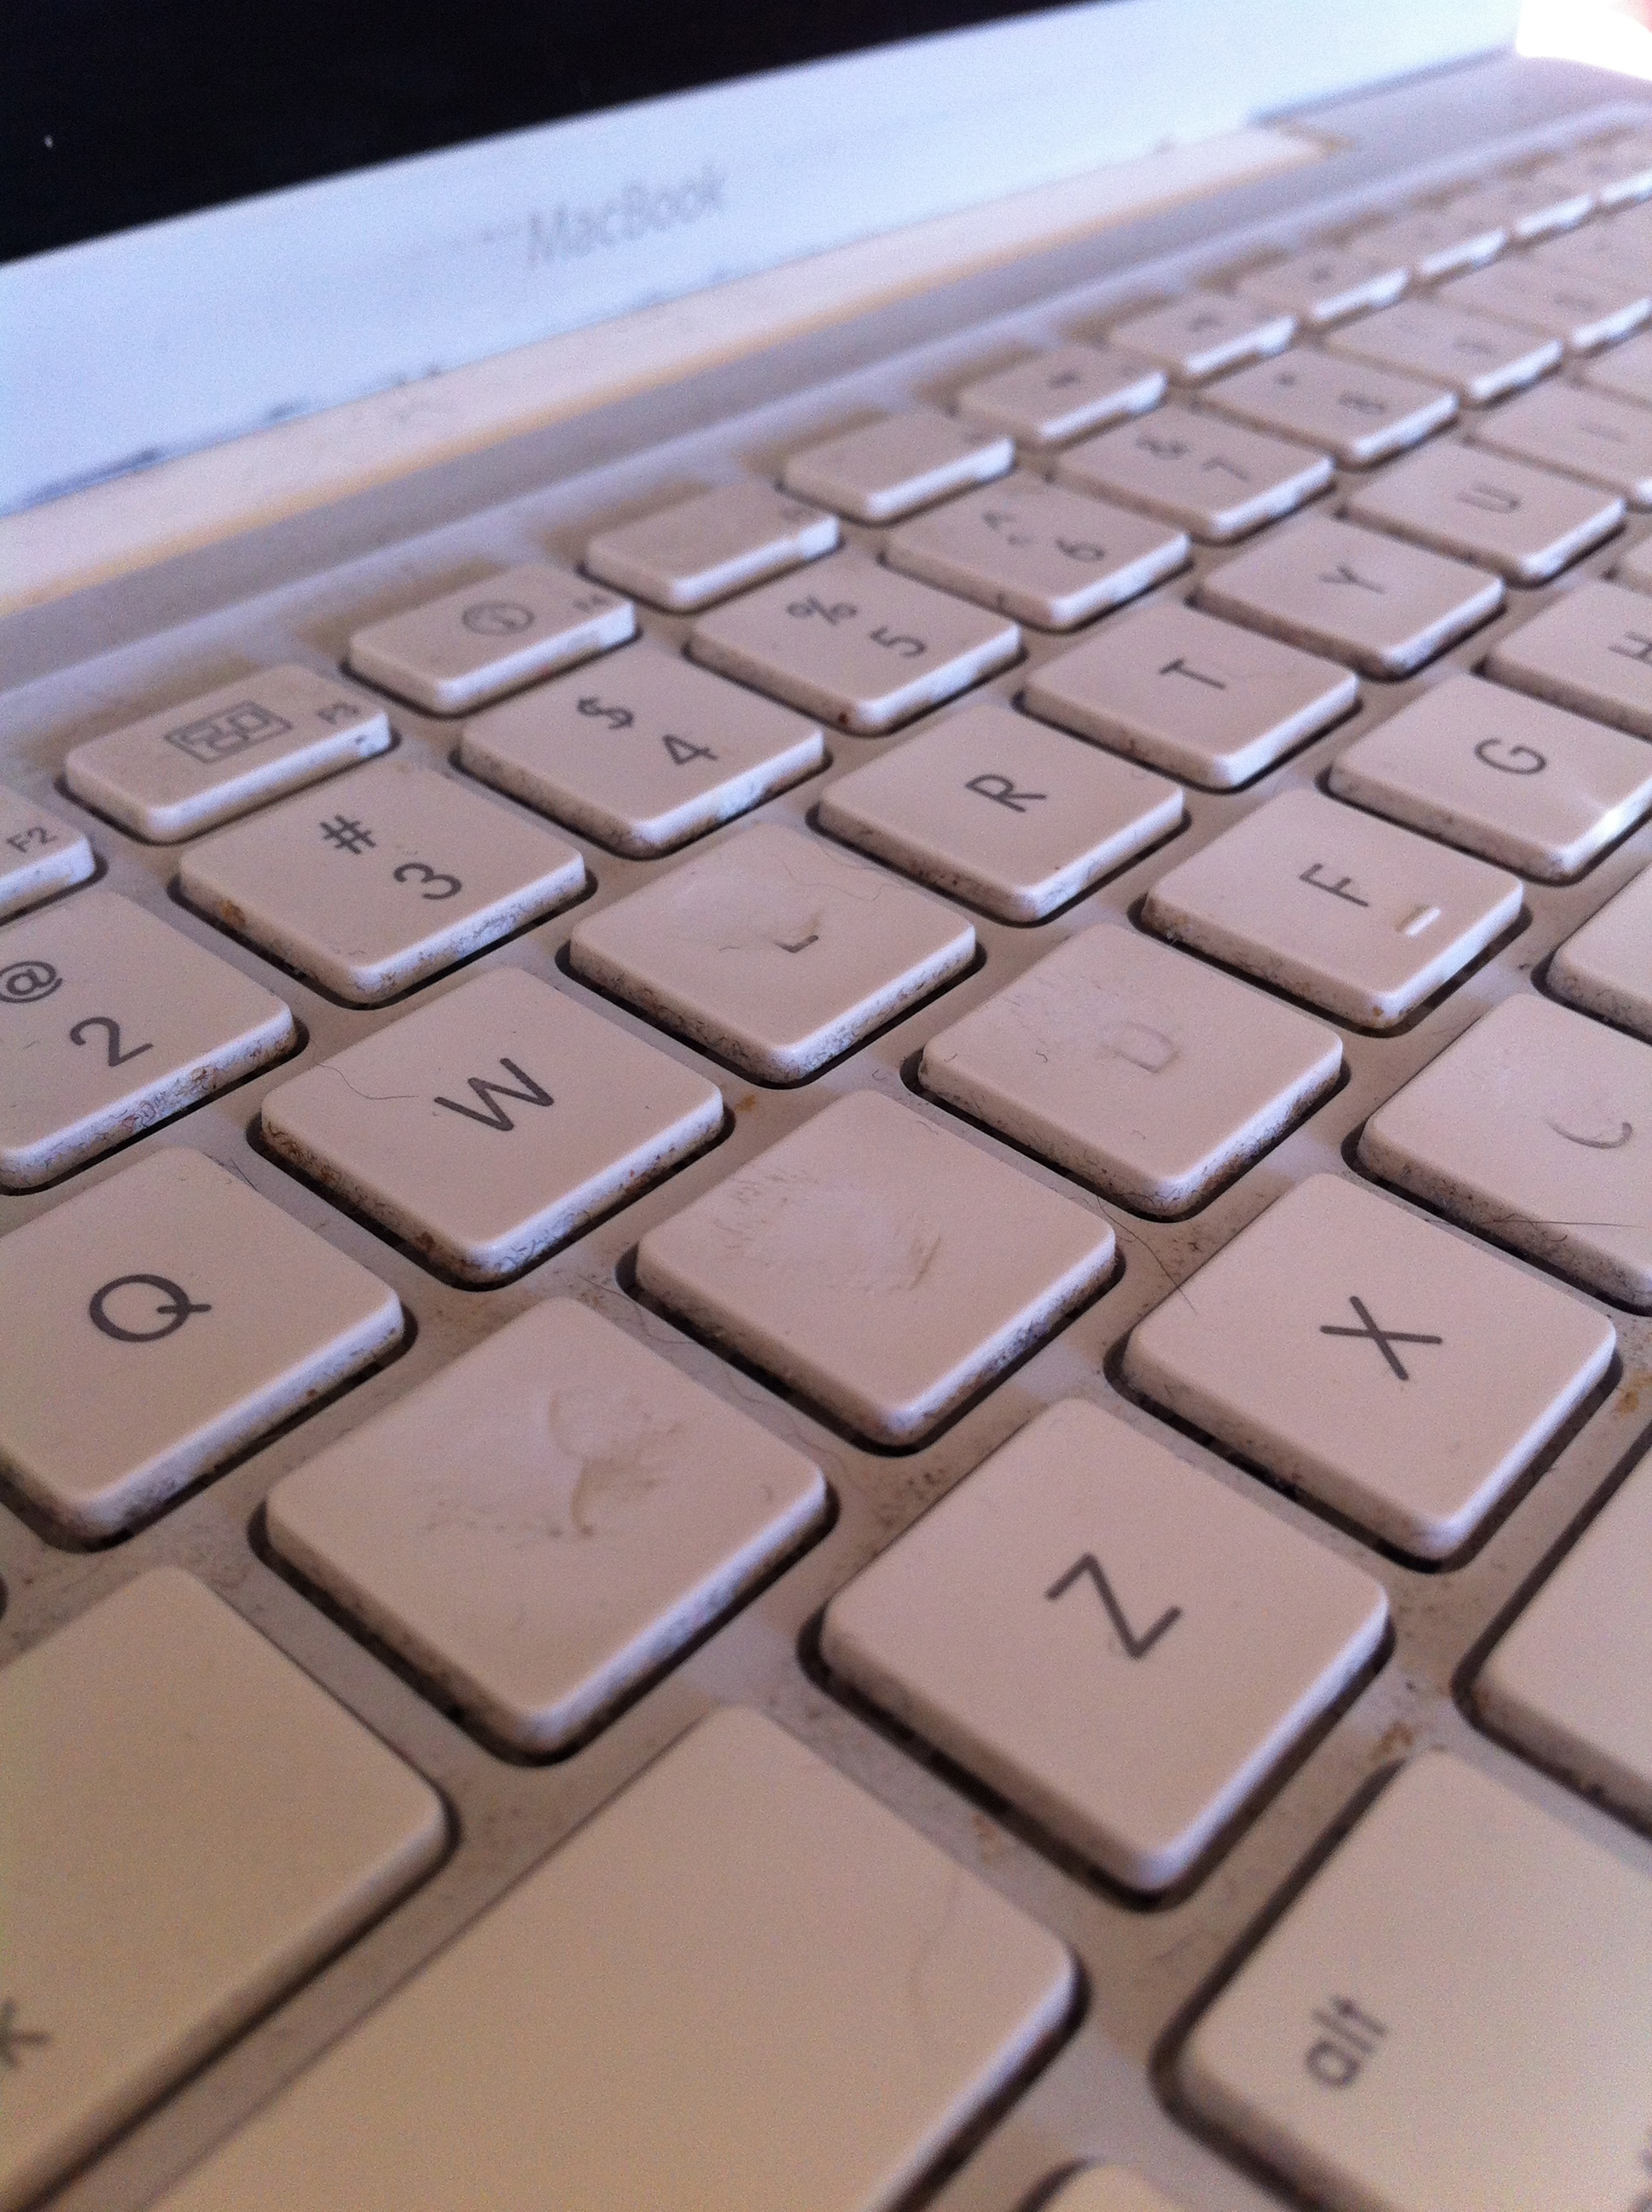 A well-worn keyboard